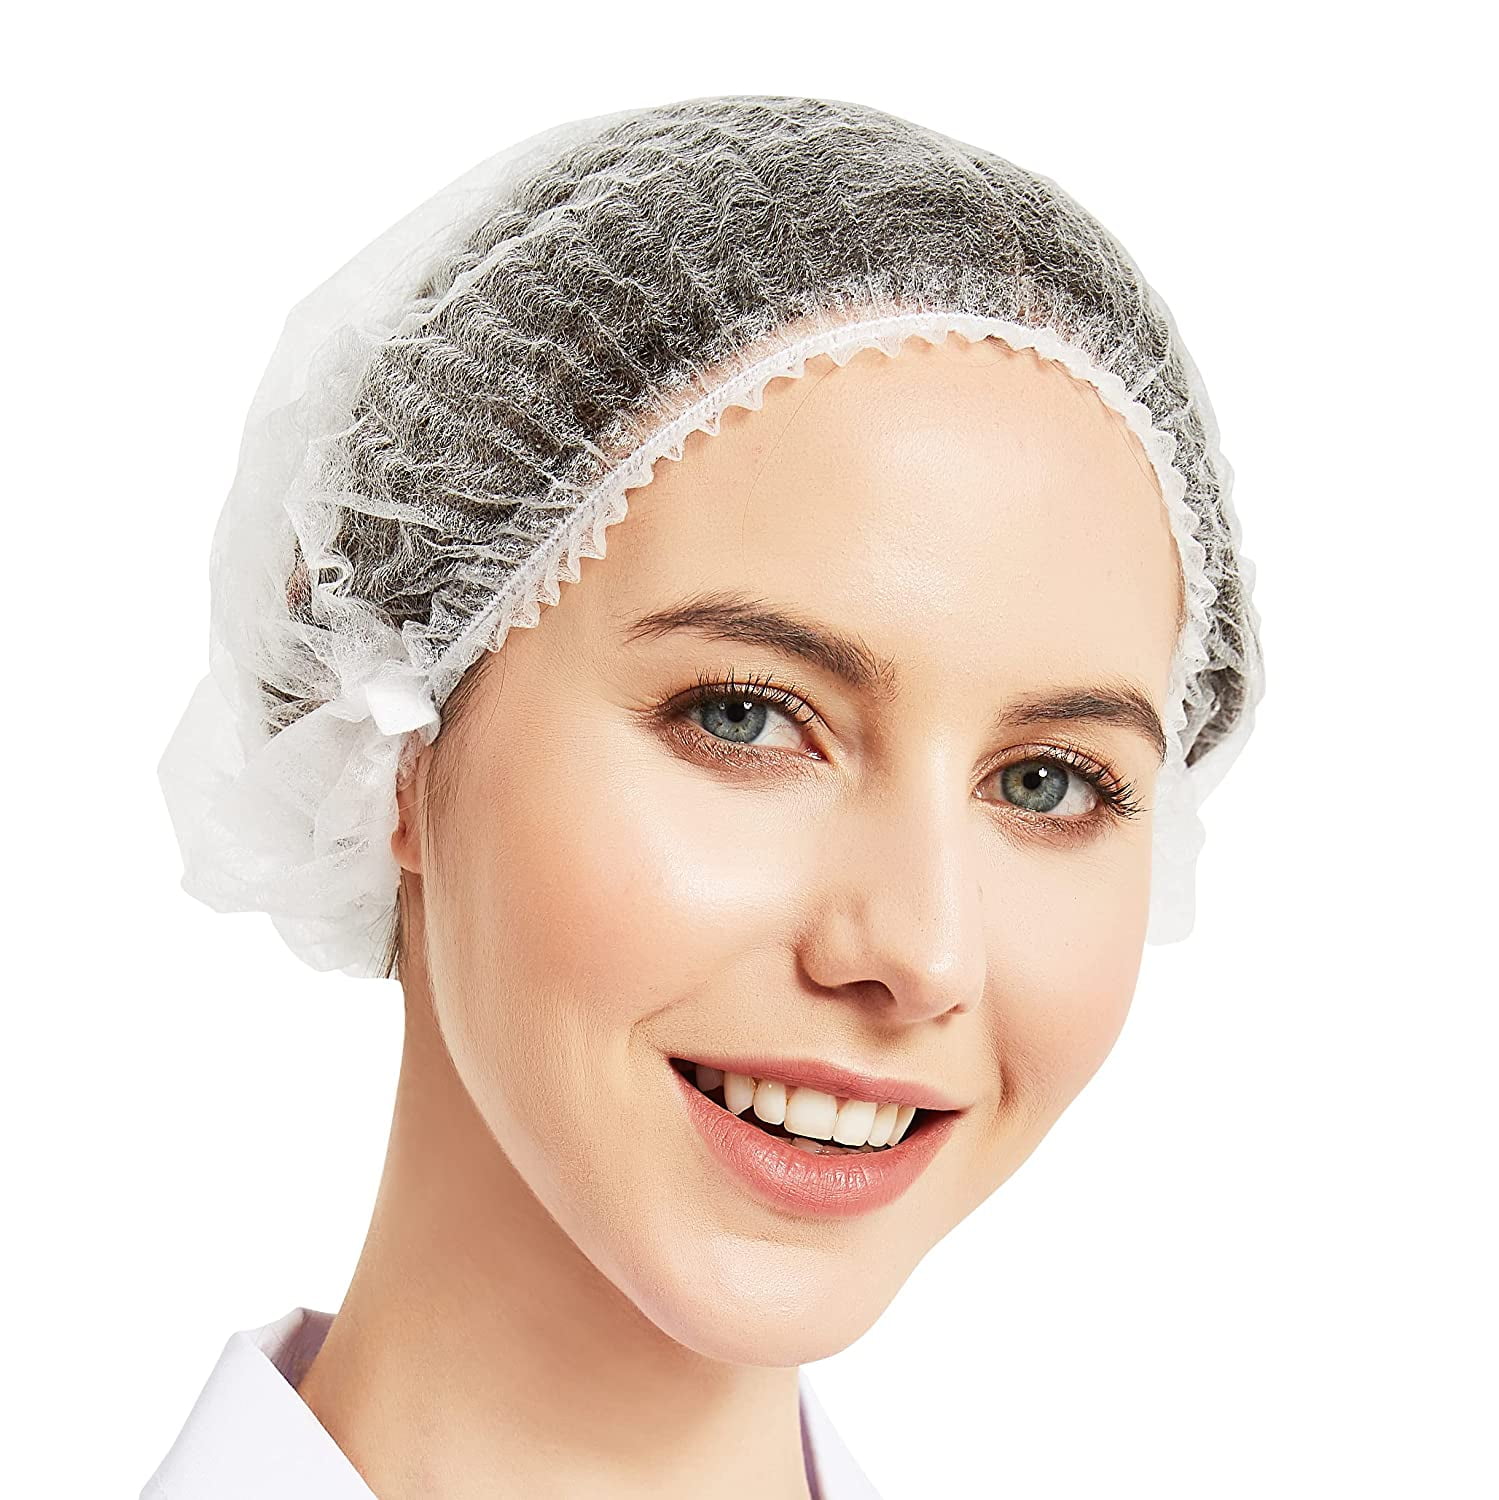 Hair Net ProtectX Disposable Bouffant White 500 pack Caps Hair Head Cover Nets 21”